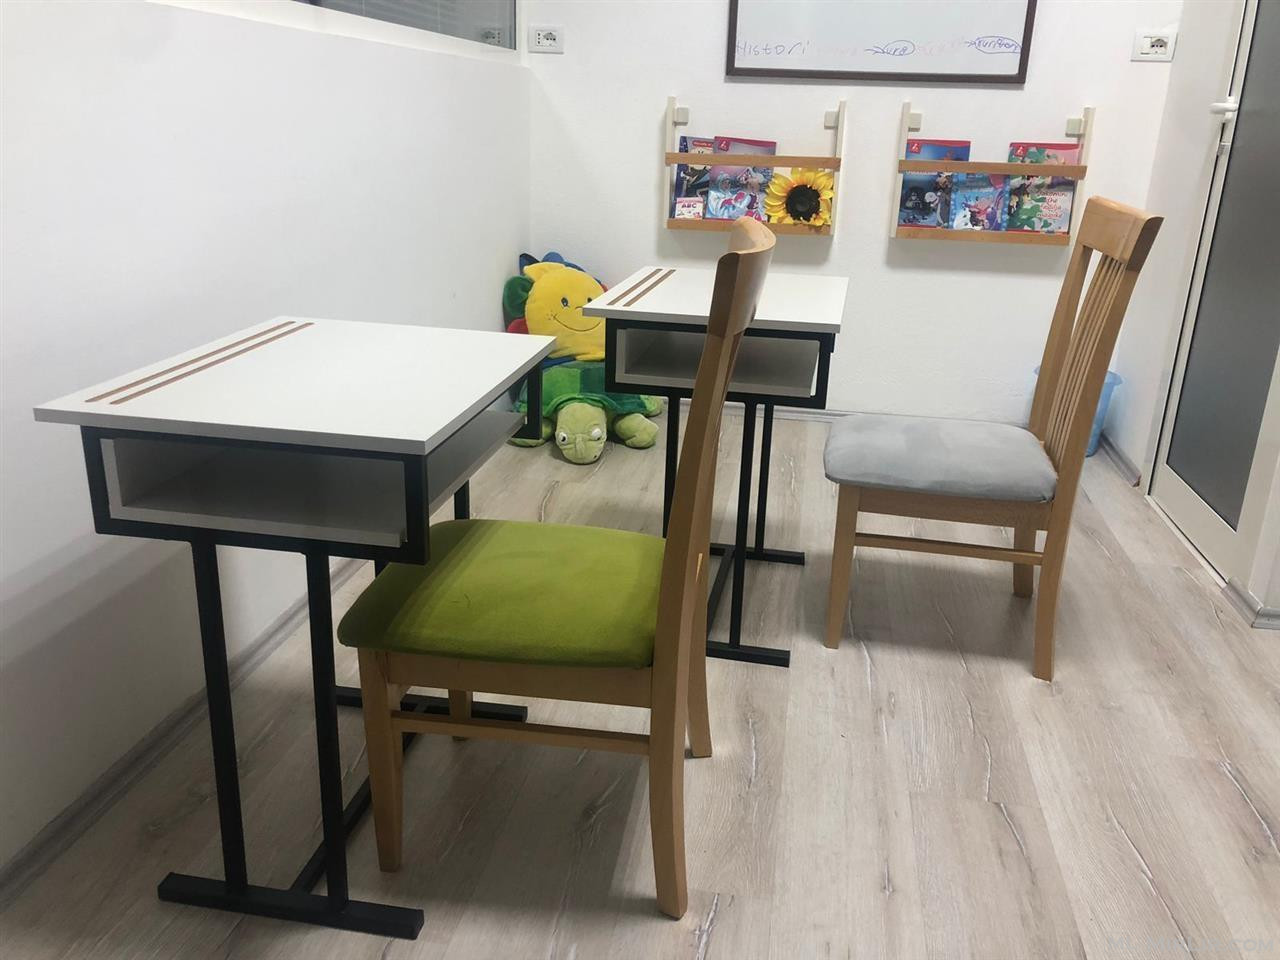 Tavoline dhe karrige studimi per femije